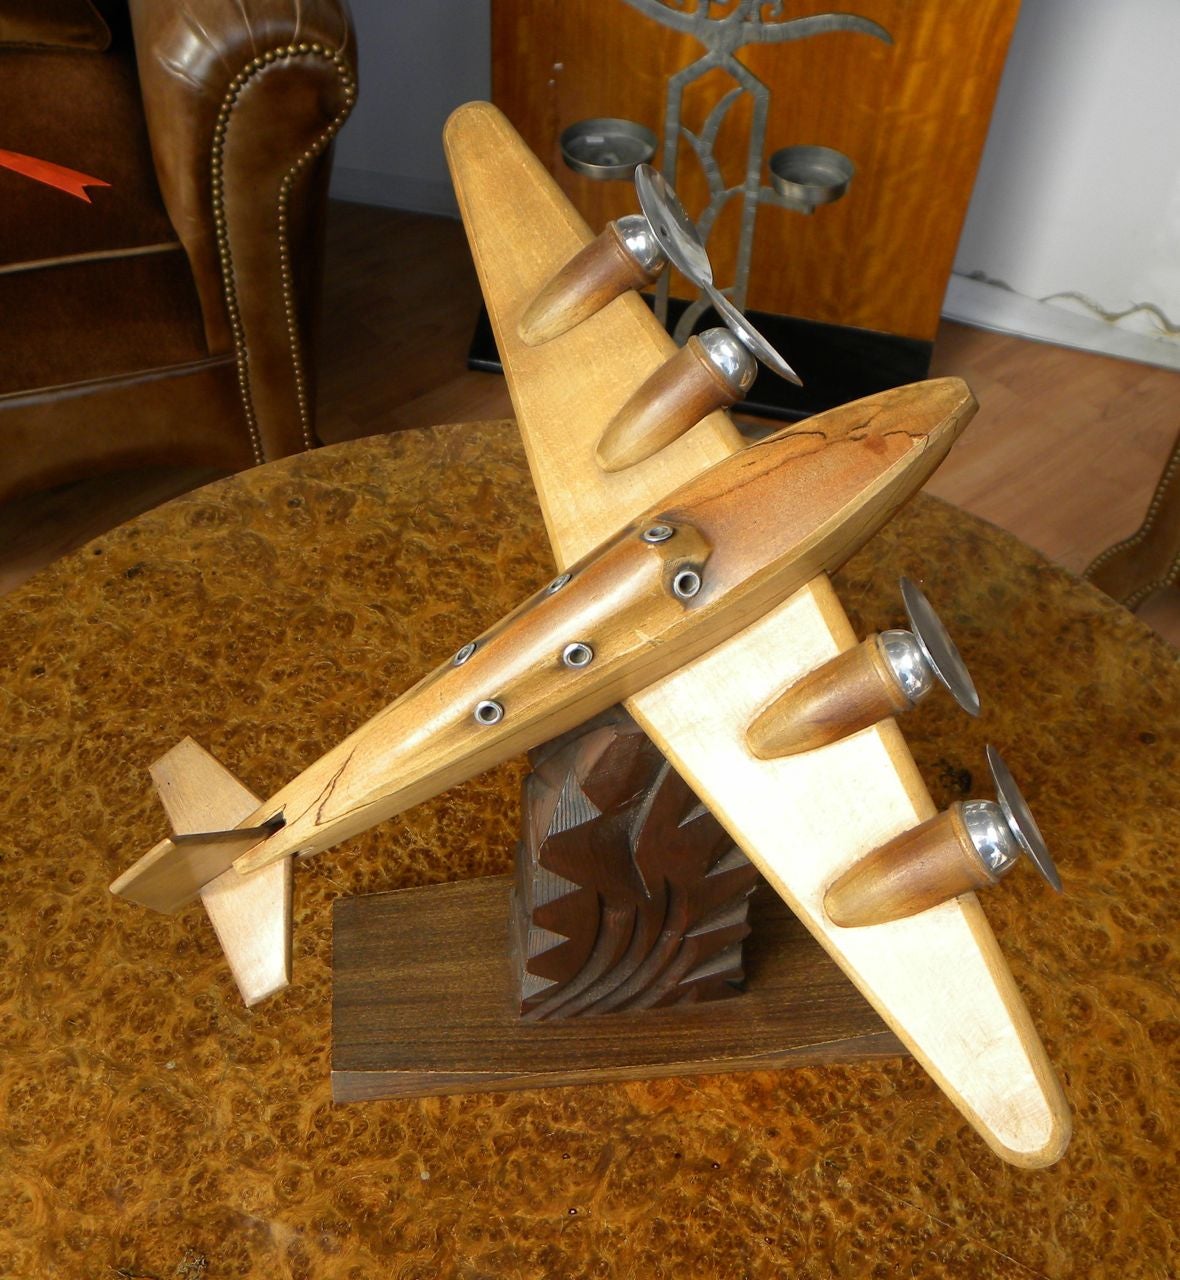 Original French Wood and Chrome Model Plane Art Deco, Period 1930s